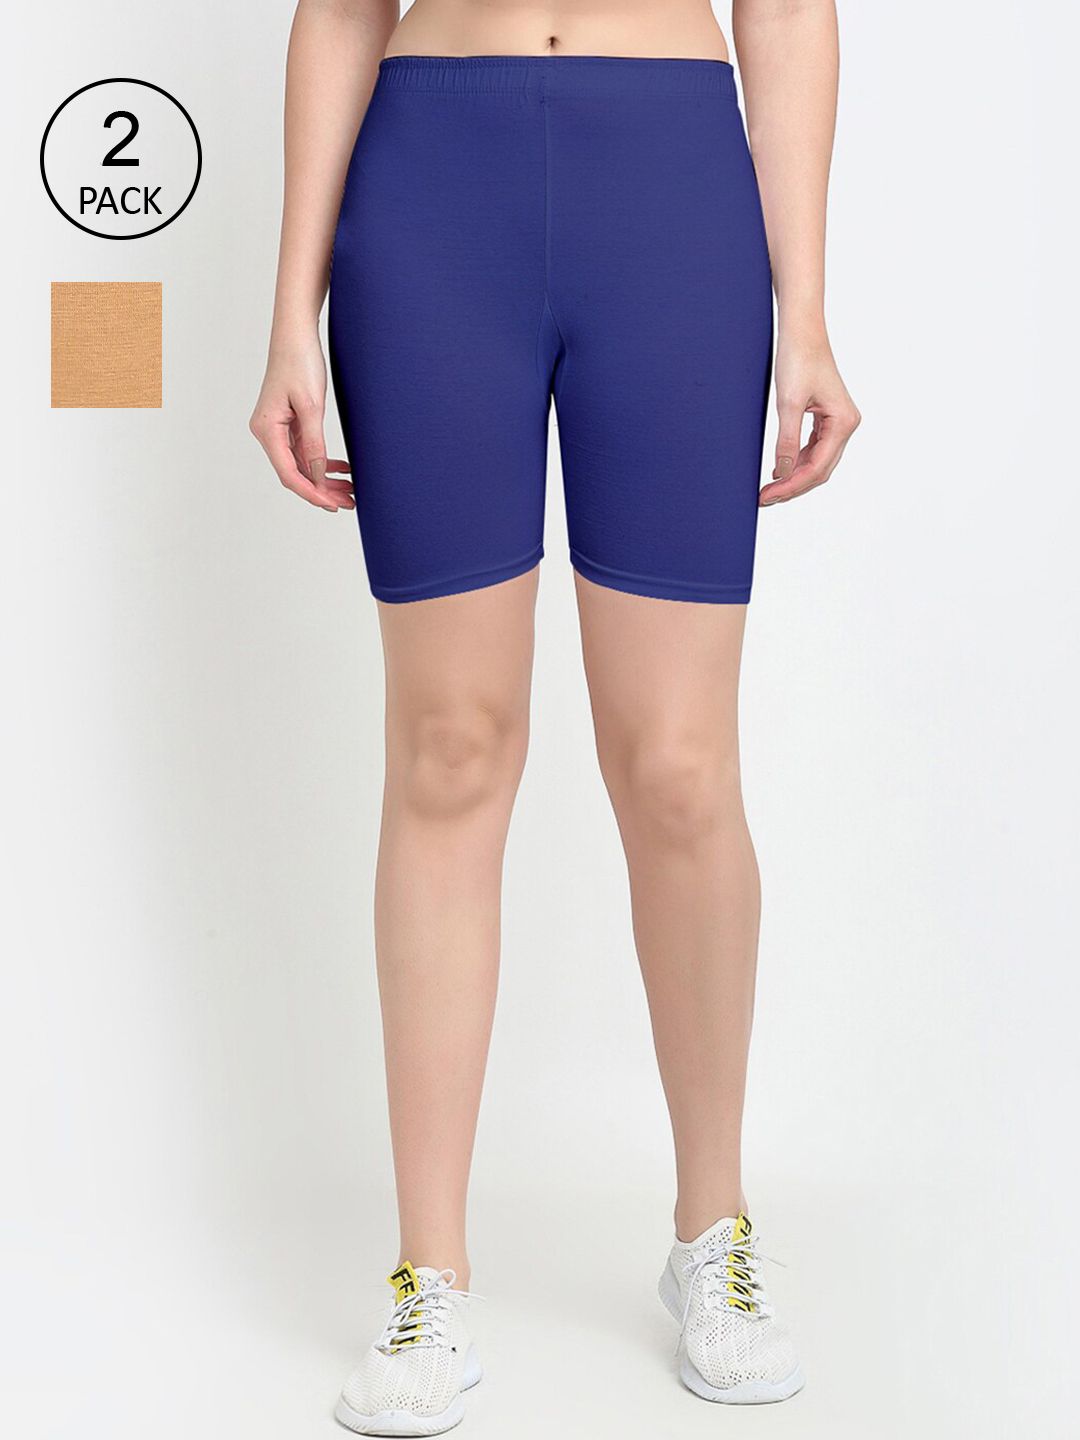 GRACIT Women Blue Biker Shorts Price in India